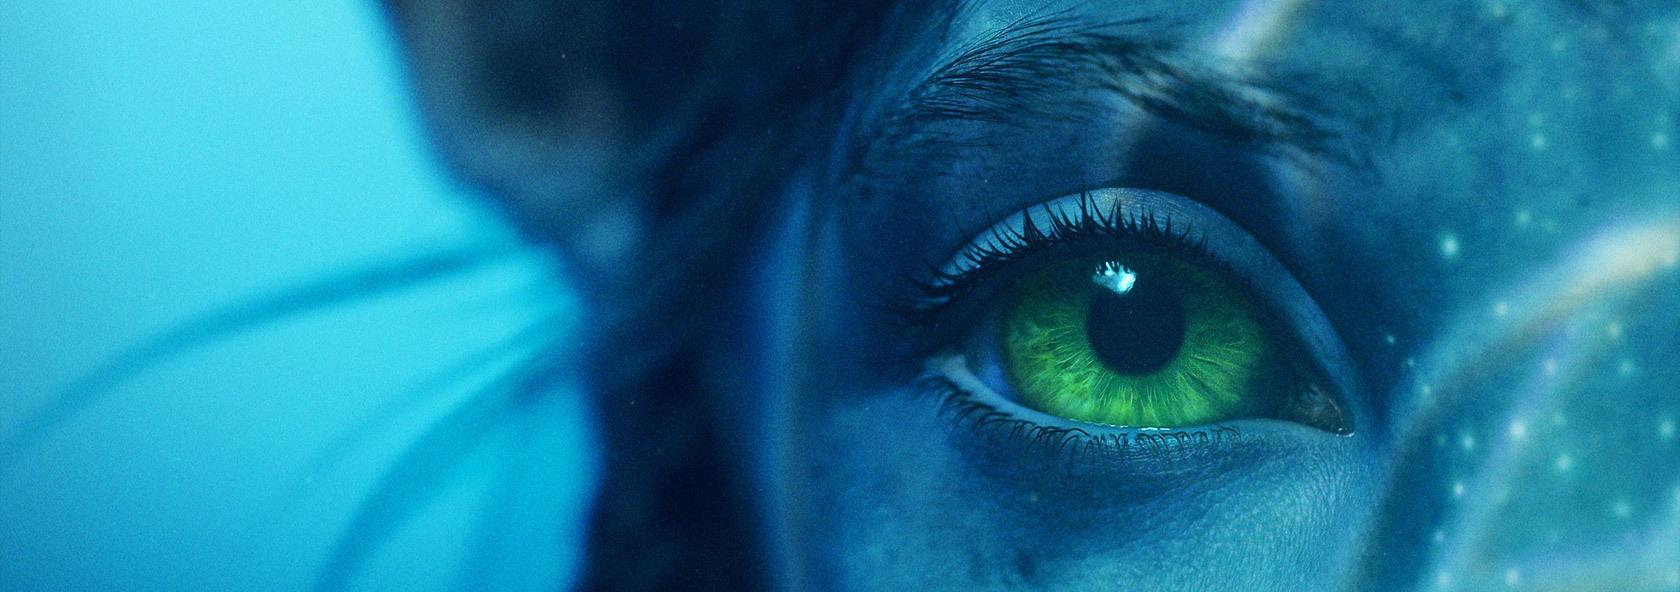 AVATAR 2 - THE WAY OF WATER: Bildgewaltiger erster Trailer: James Camerons AVATAR 2